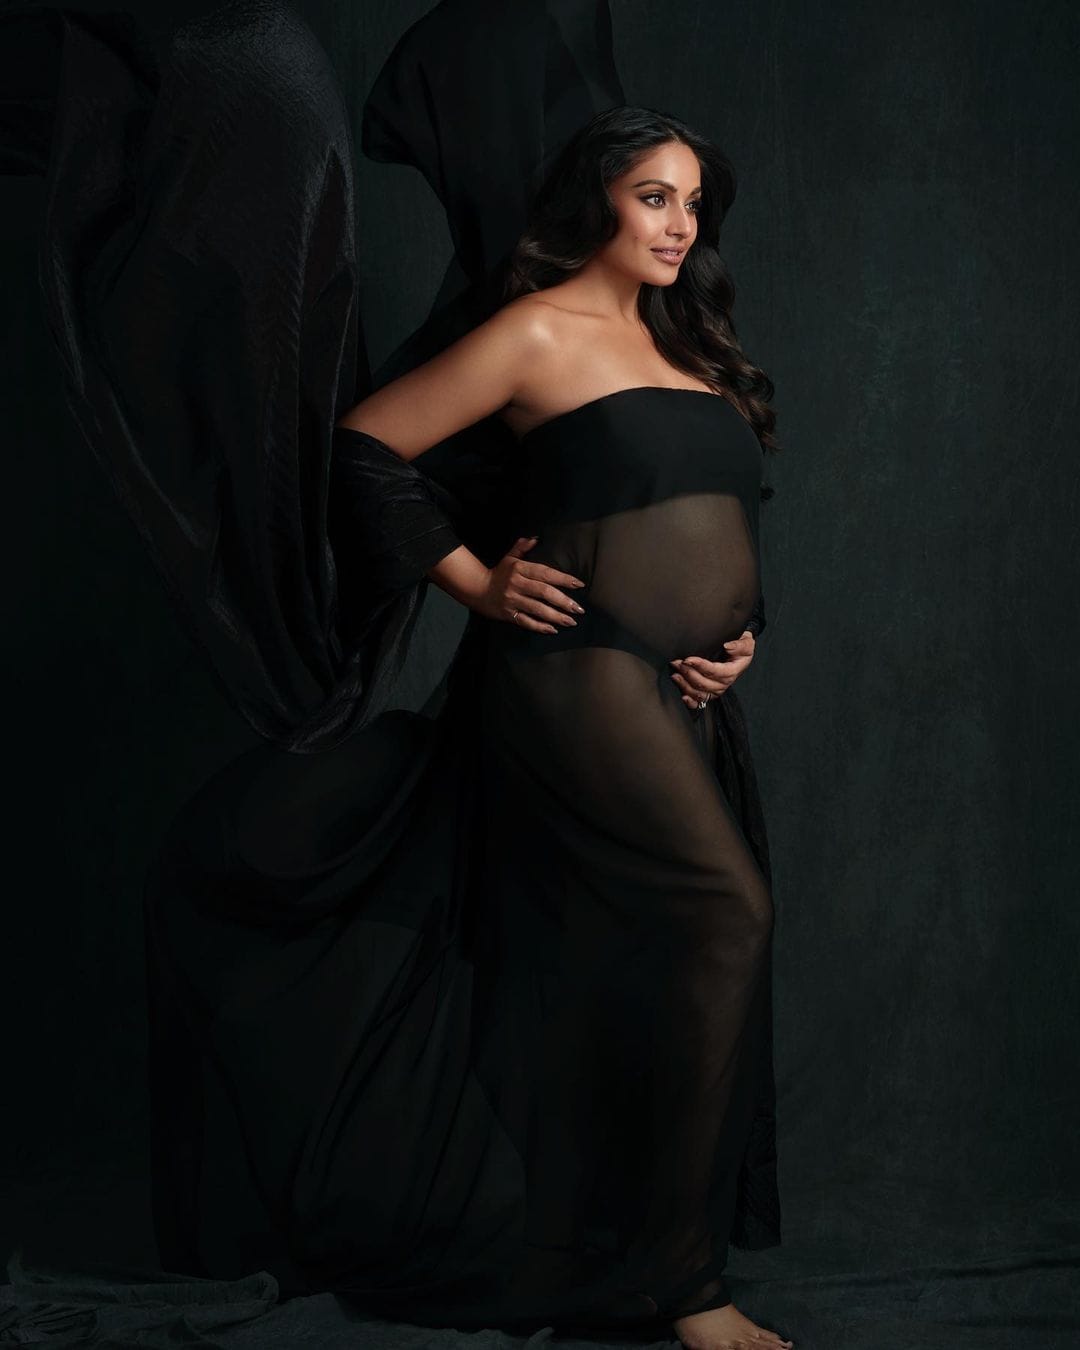 Bipasha Basu looks radiant as she flaunts her baby bump in a black sheer dress